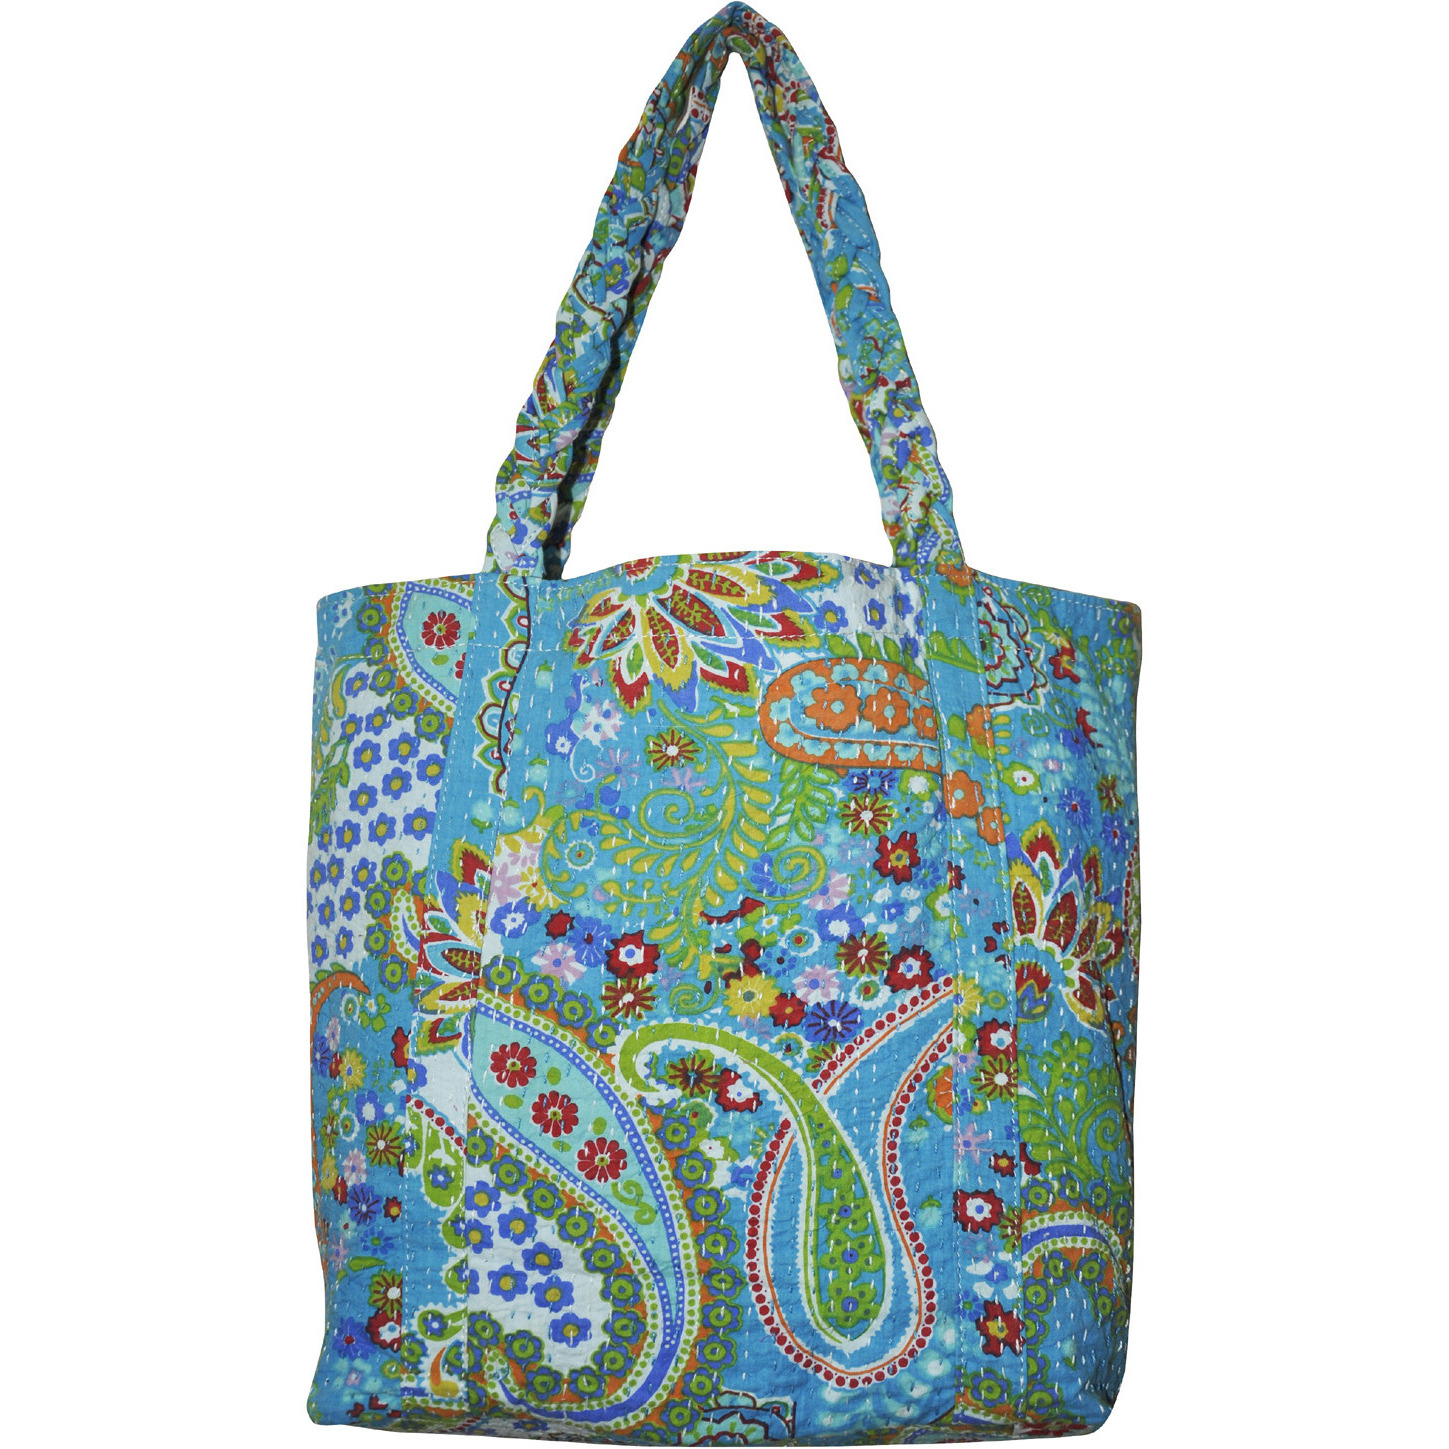 Ladies Bag Cotton Turquoise Women Shopping Tote Shoulder Bag 45 Cm